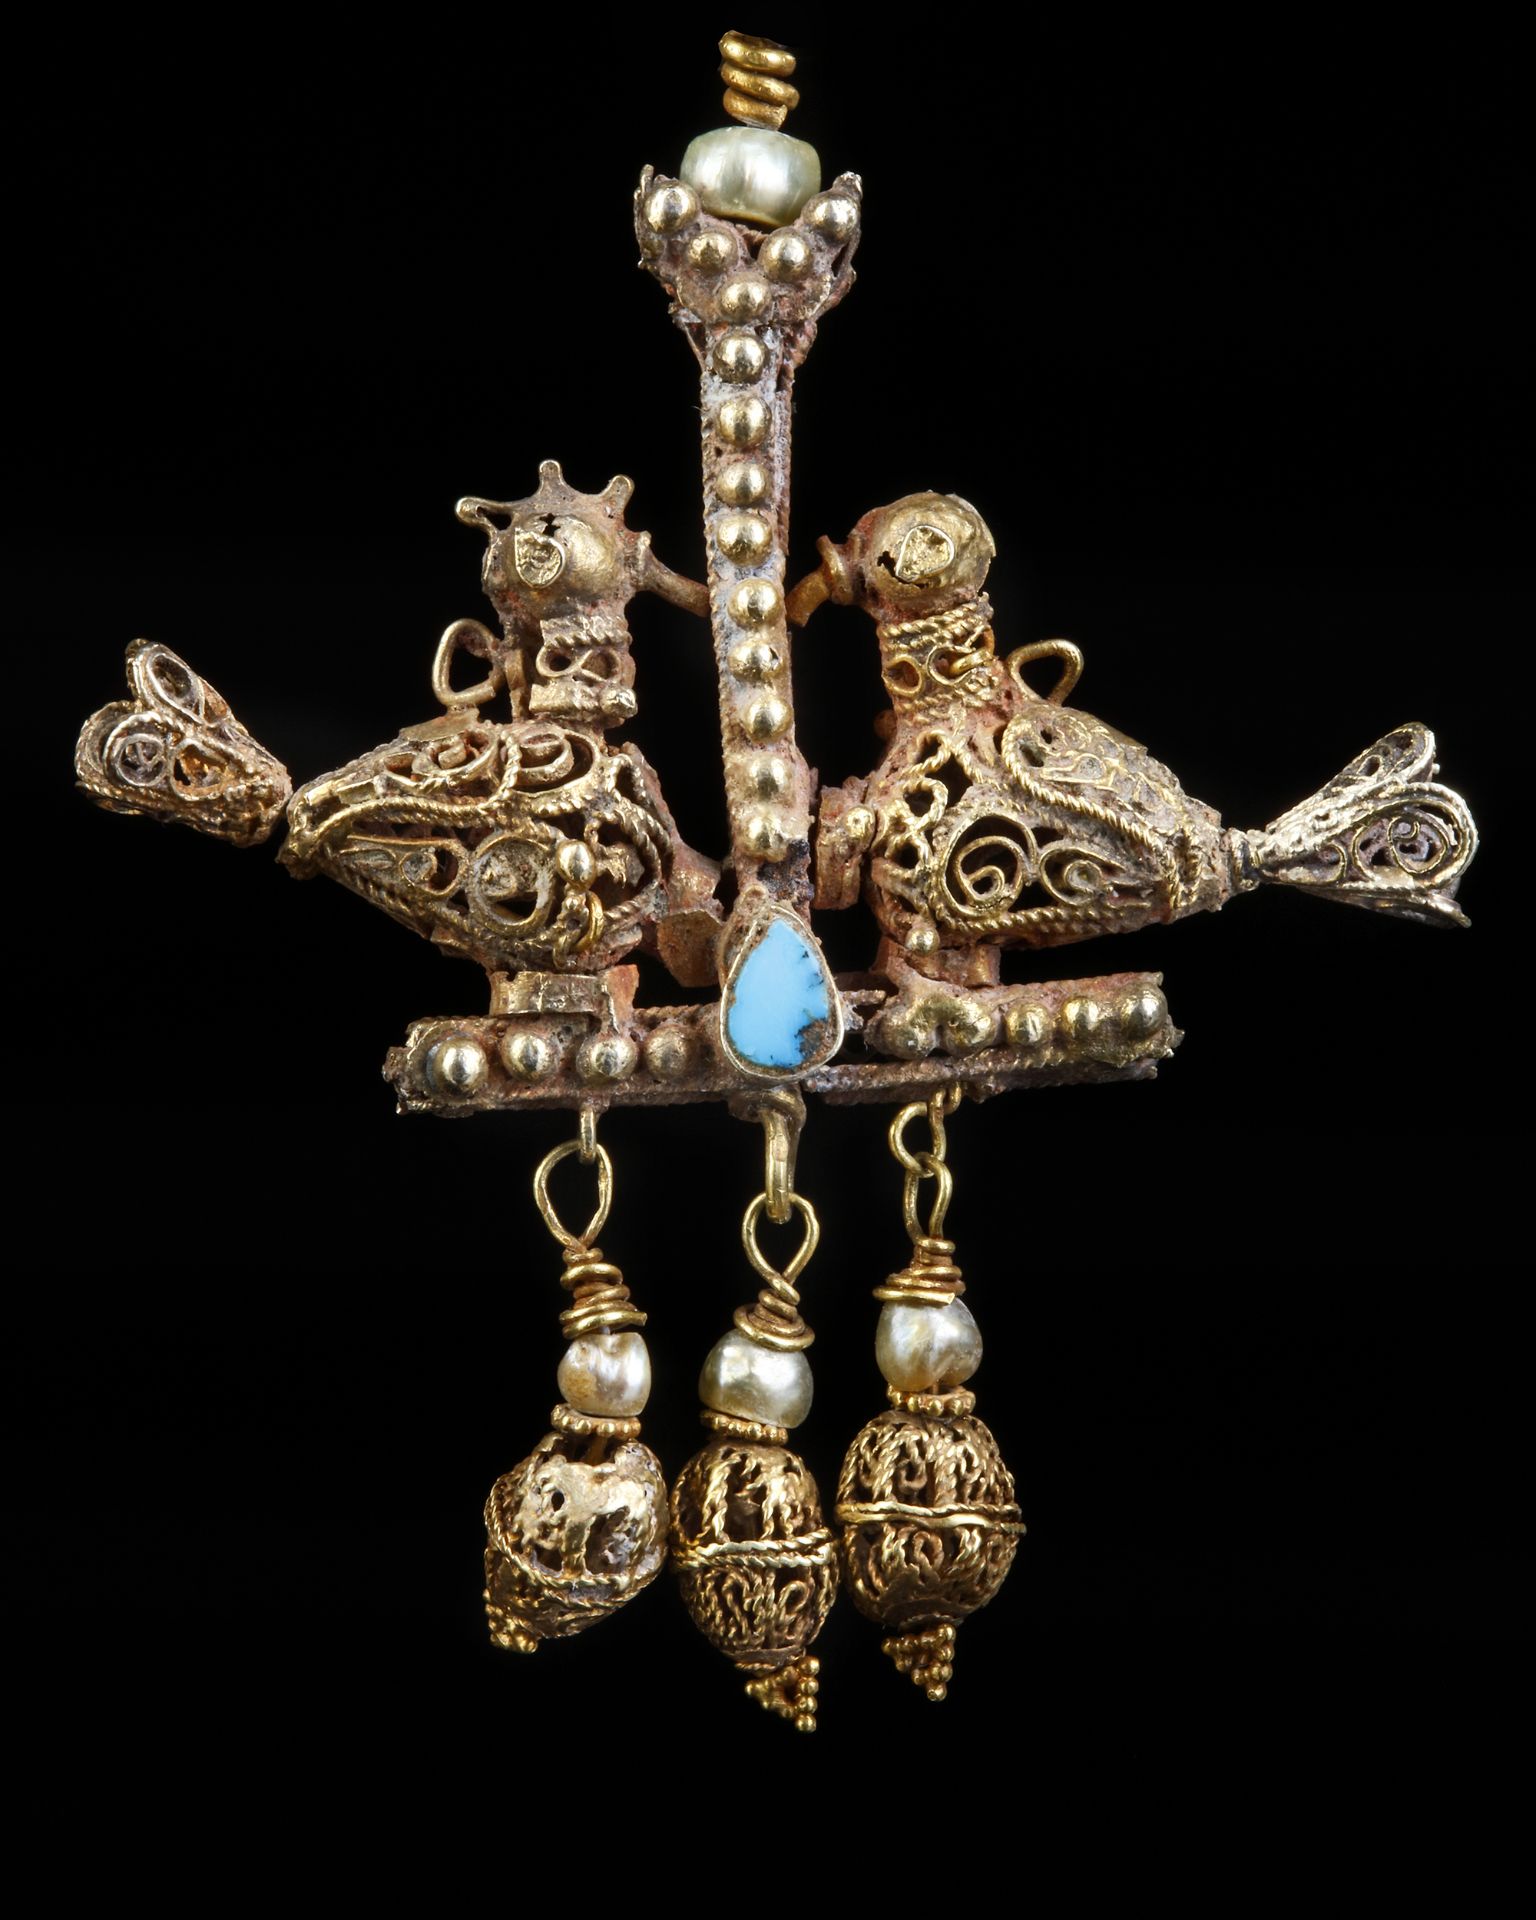 A SELJUK GOLD PENDANT, PERSIA, 11TH-12TH CENTURY - Image 2 of 6